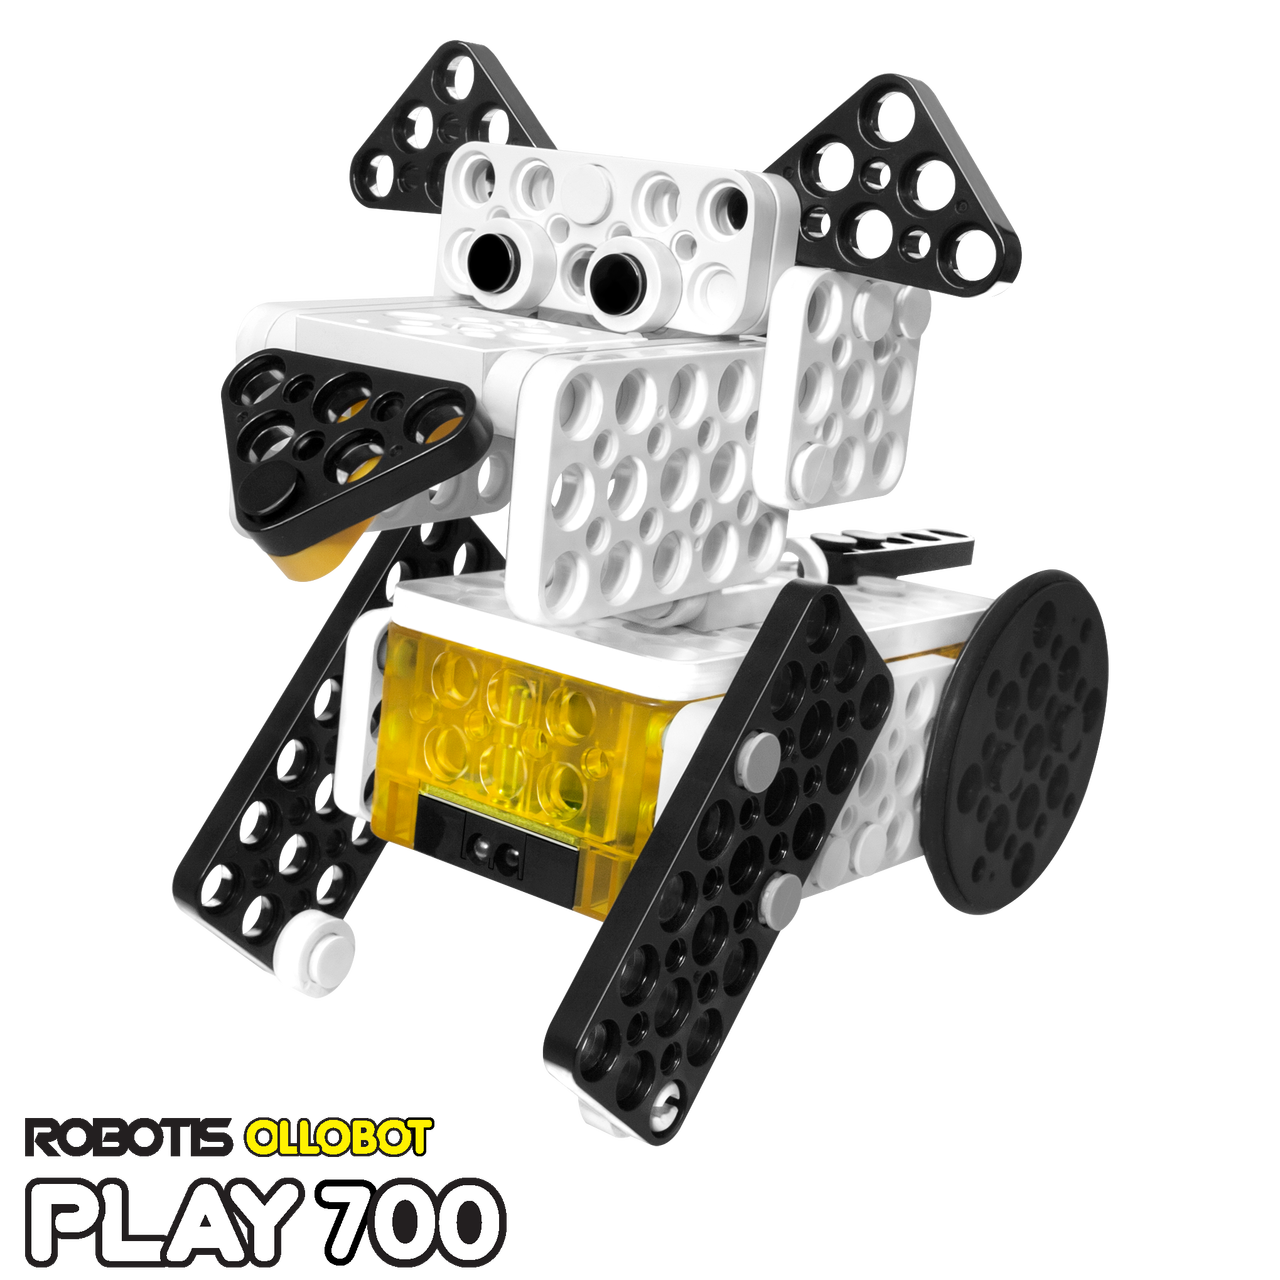 ROBOTIS-PLAY700-OLLOBOT